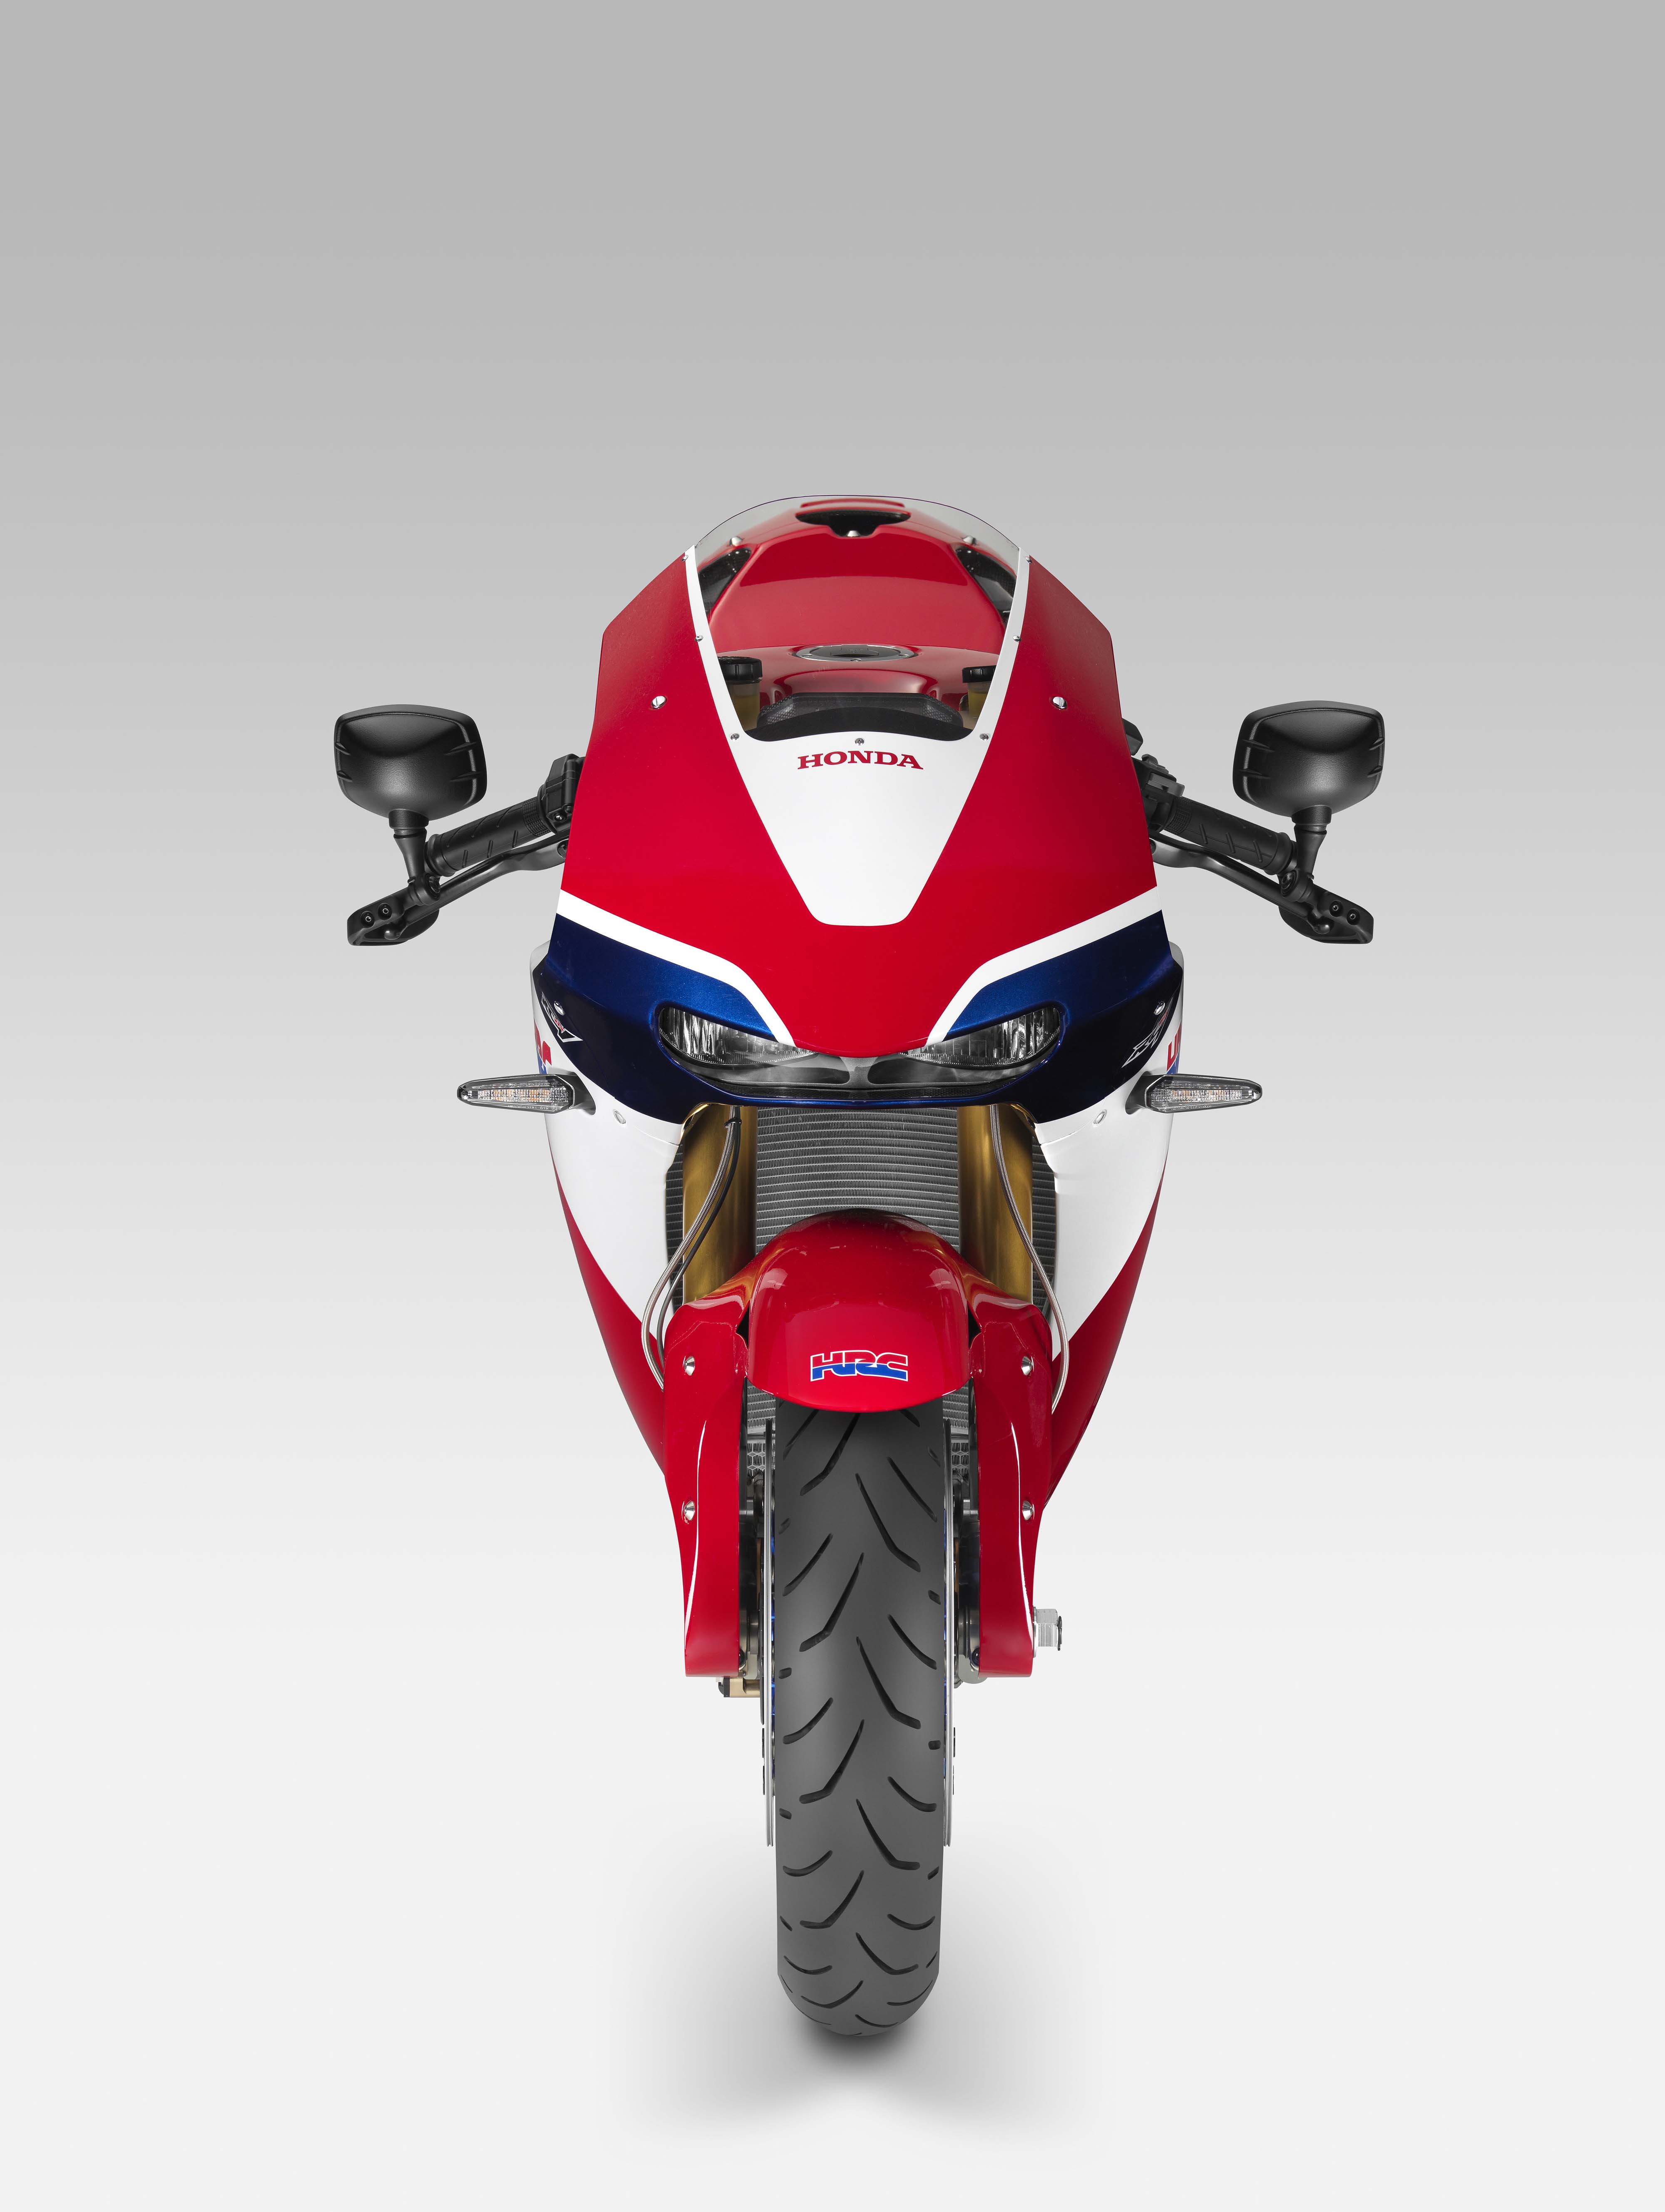 2015-Honda-RC213V-S-prototype-06.jpg